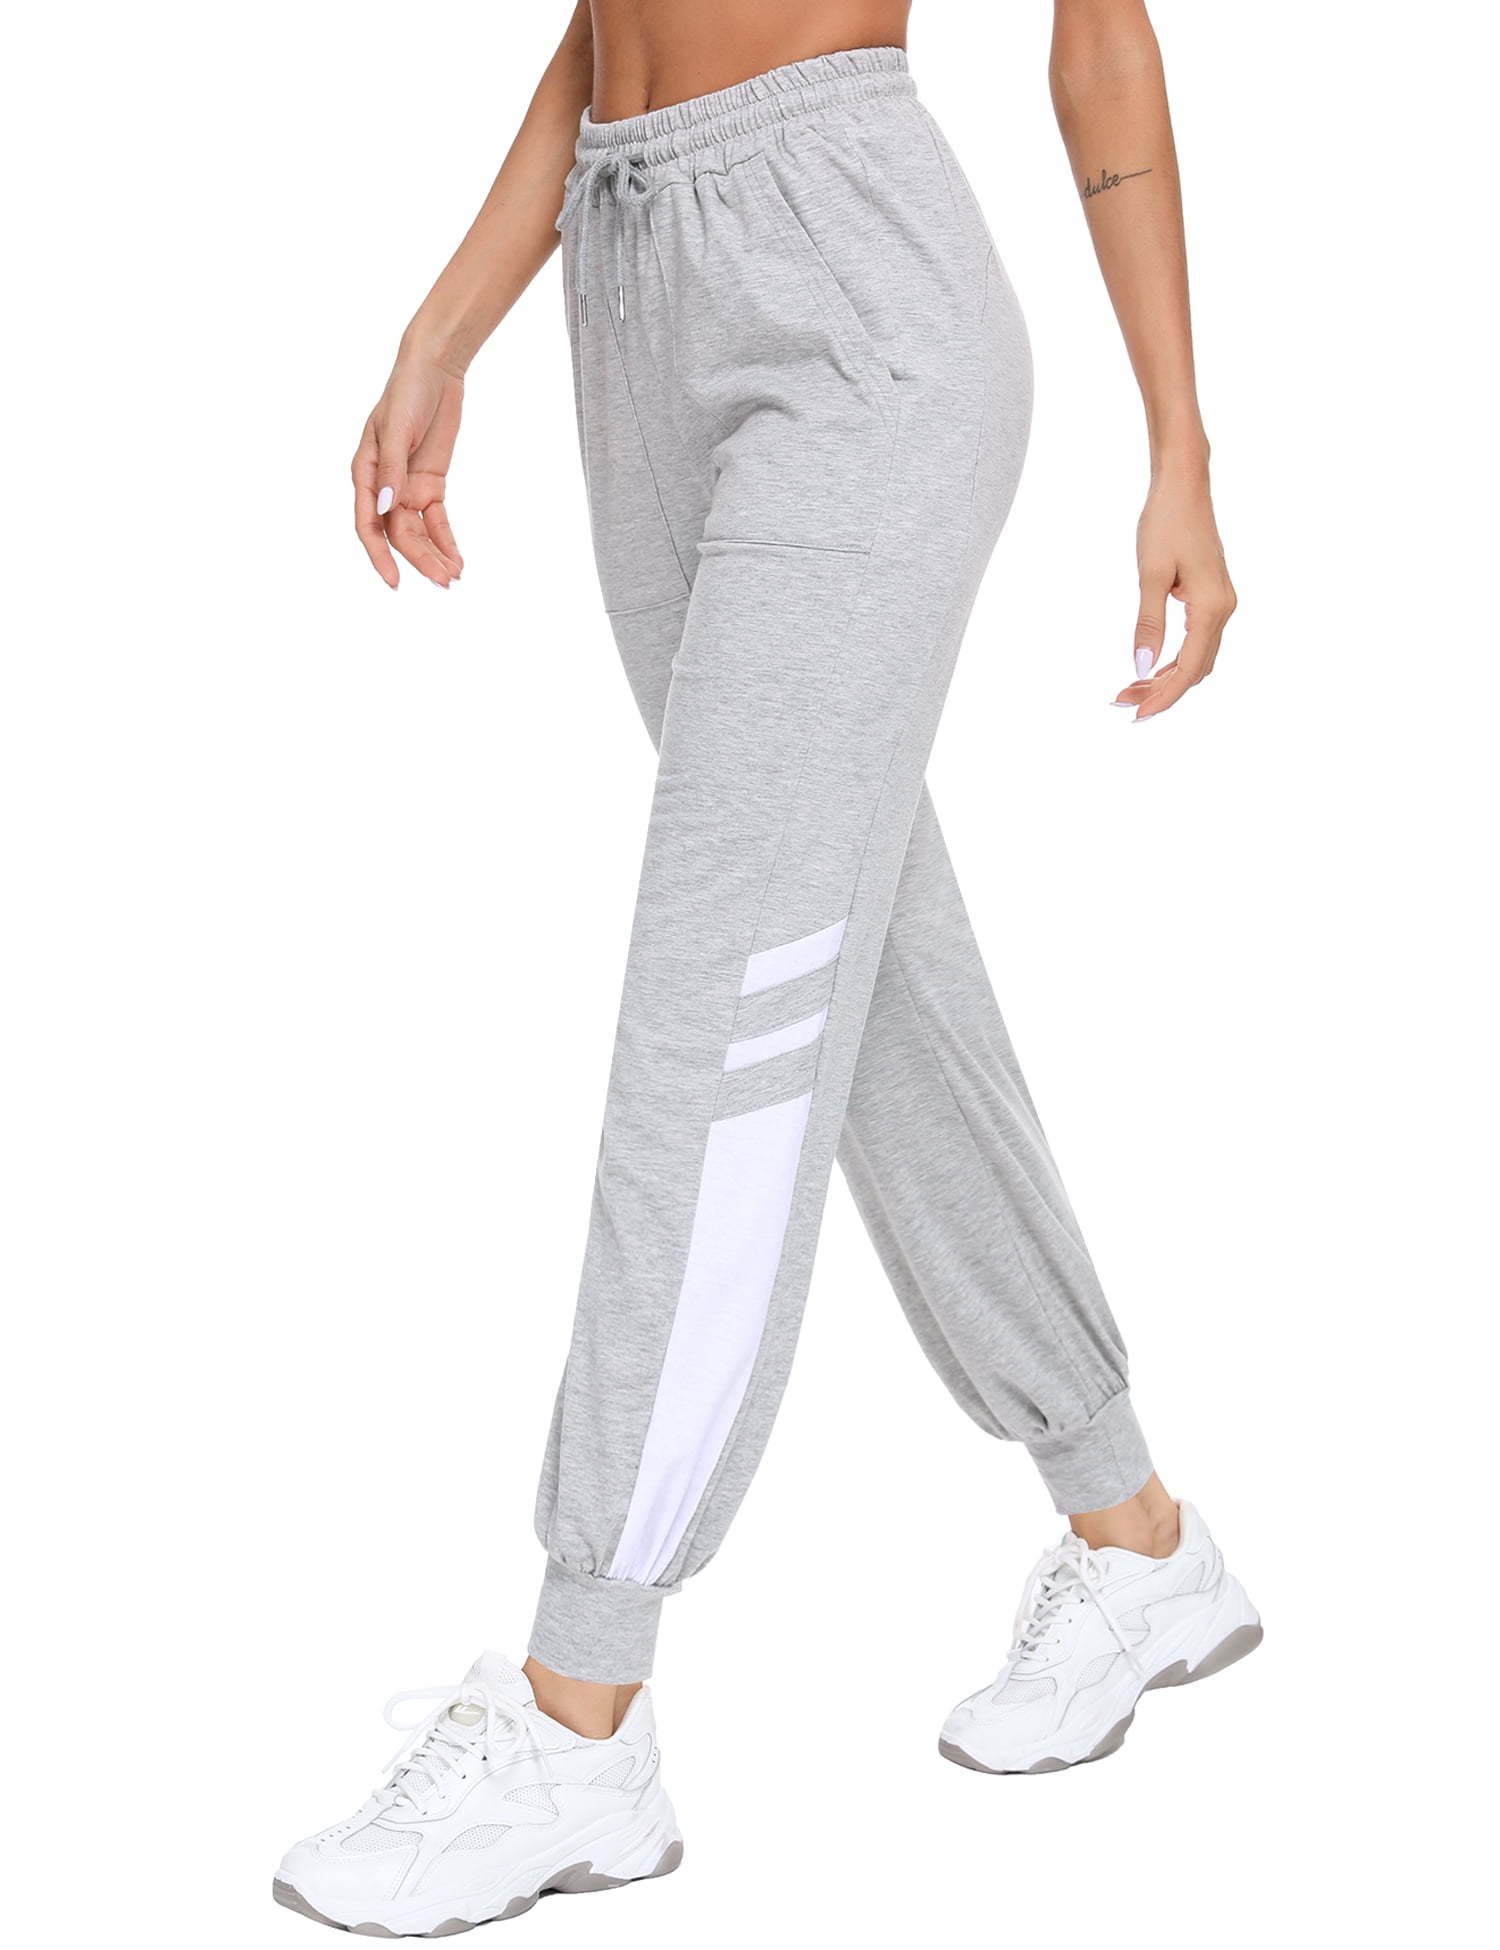 iClosam Women's Tracksuit Sports Trousers Yoga Sweatpants Workout Jogger Pants Elasticity Waist Drawstring with Pockets 